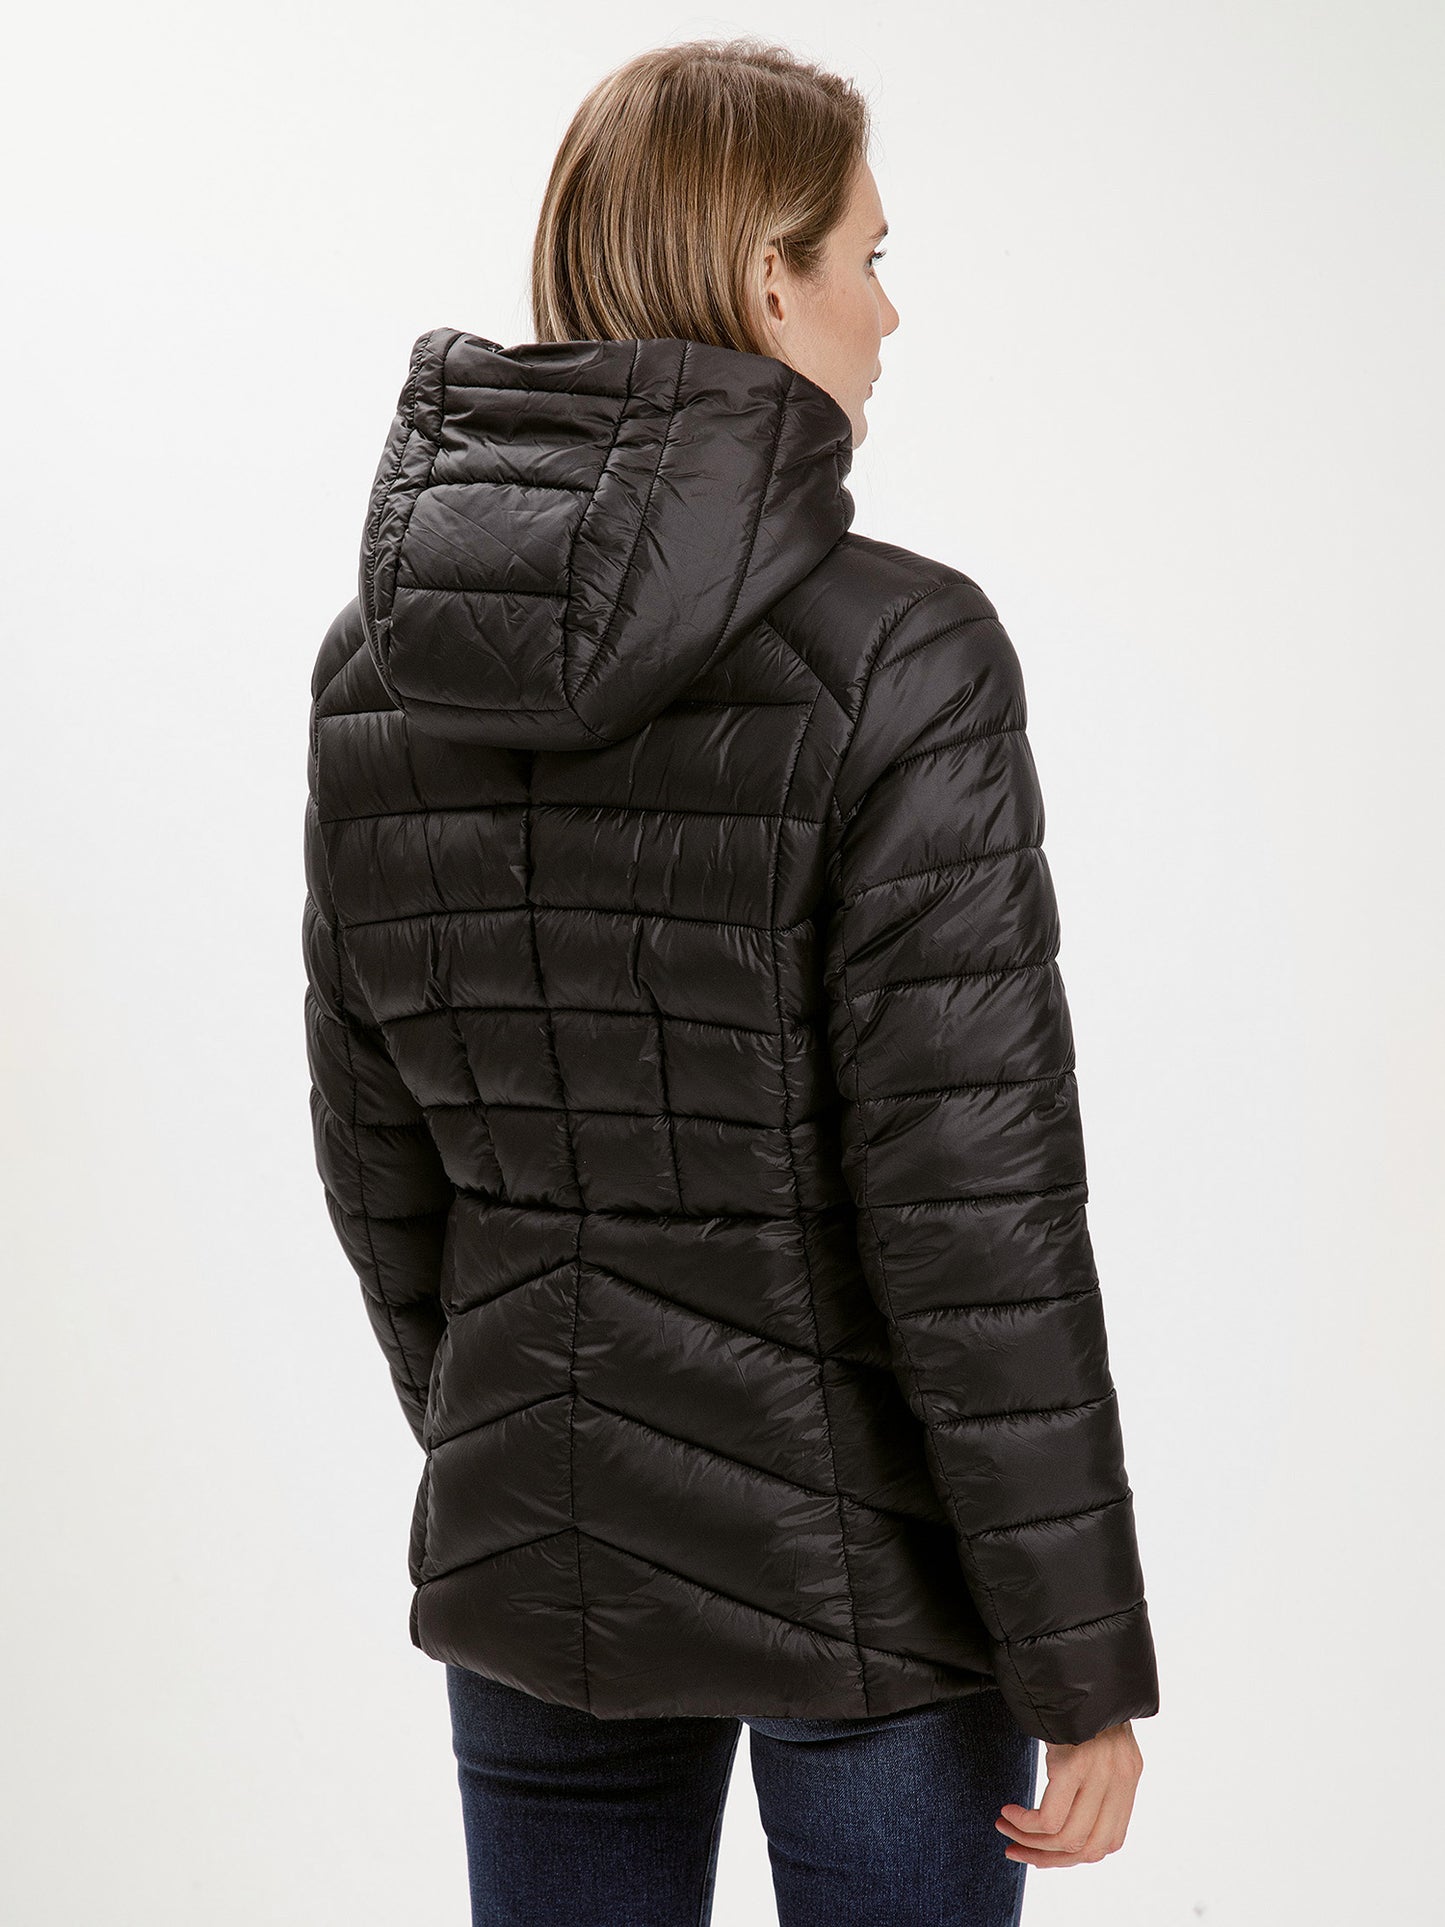 Women's regular winter jacket in black